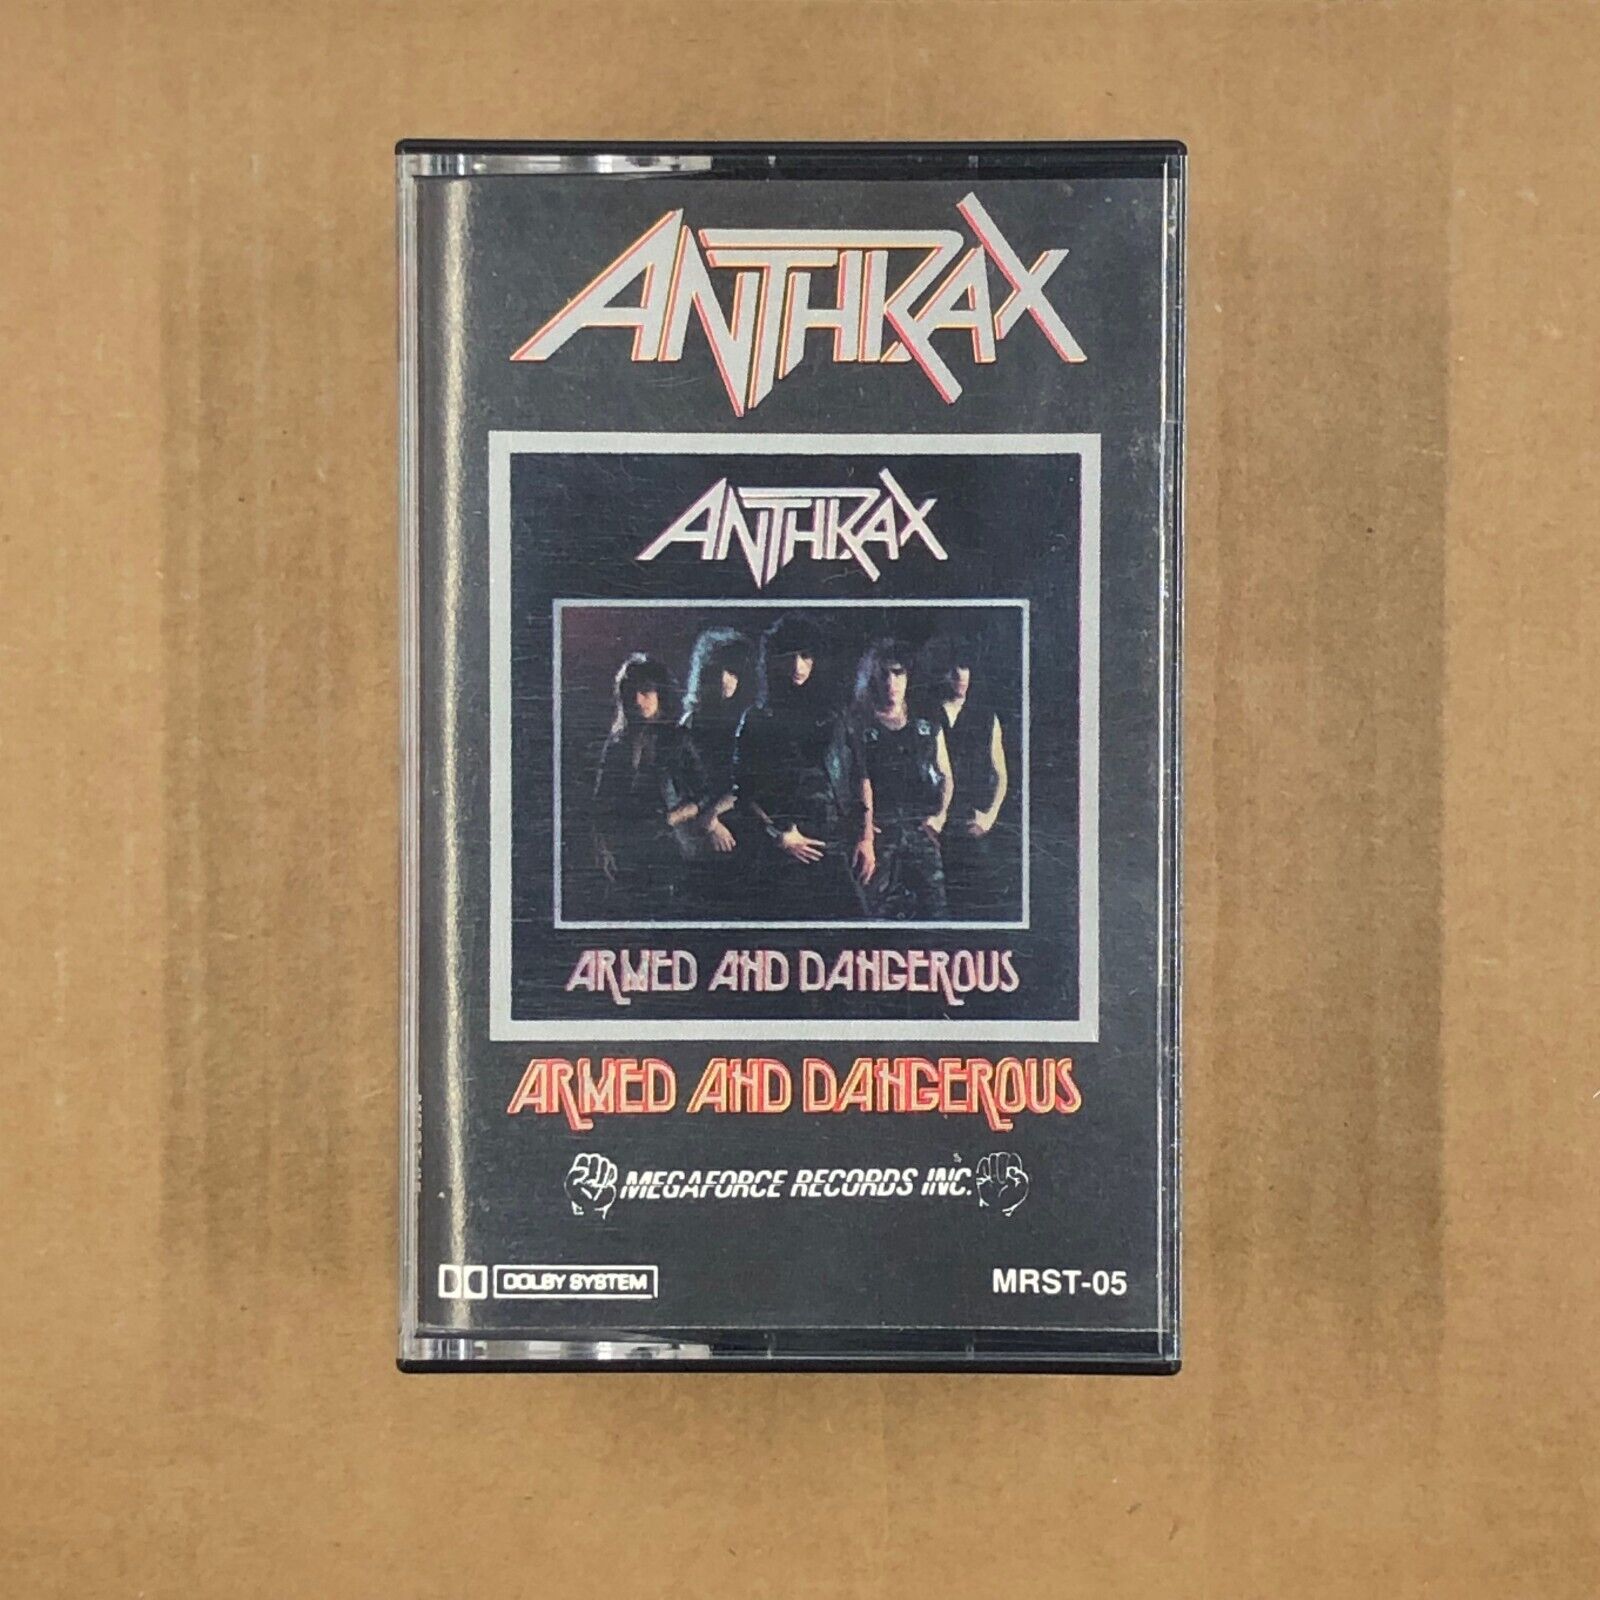 ANTHRAX Cassette Tape Metal Thrash ARMED AND DANGEROUS 1985 MEGAFORCE MRST 05